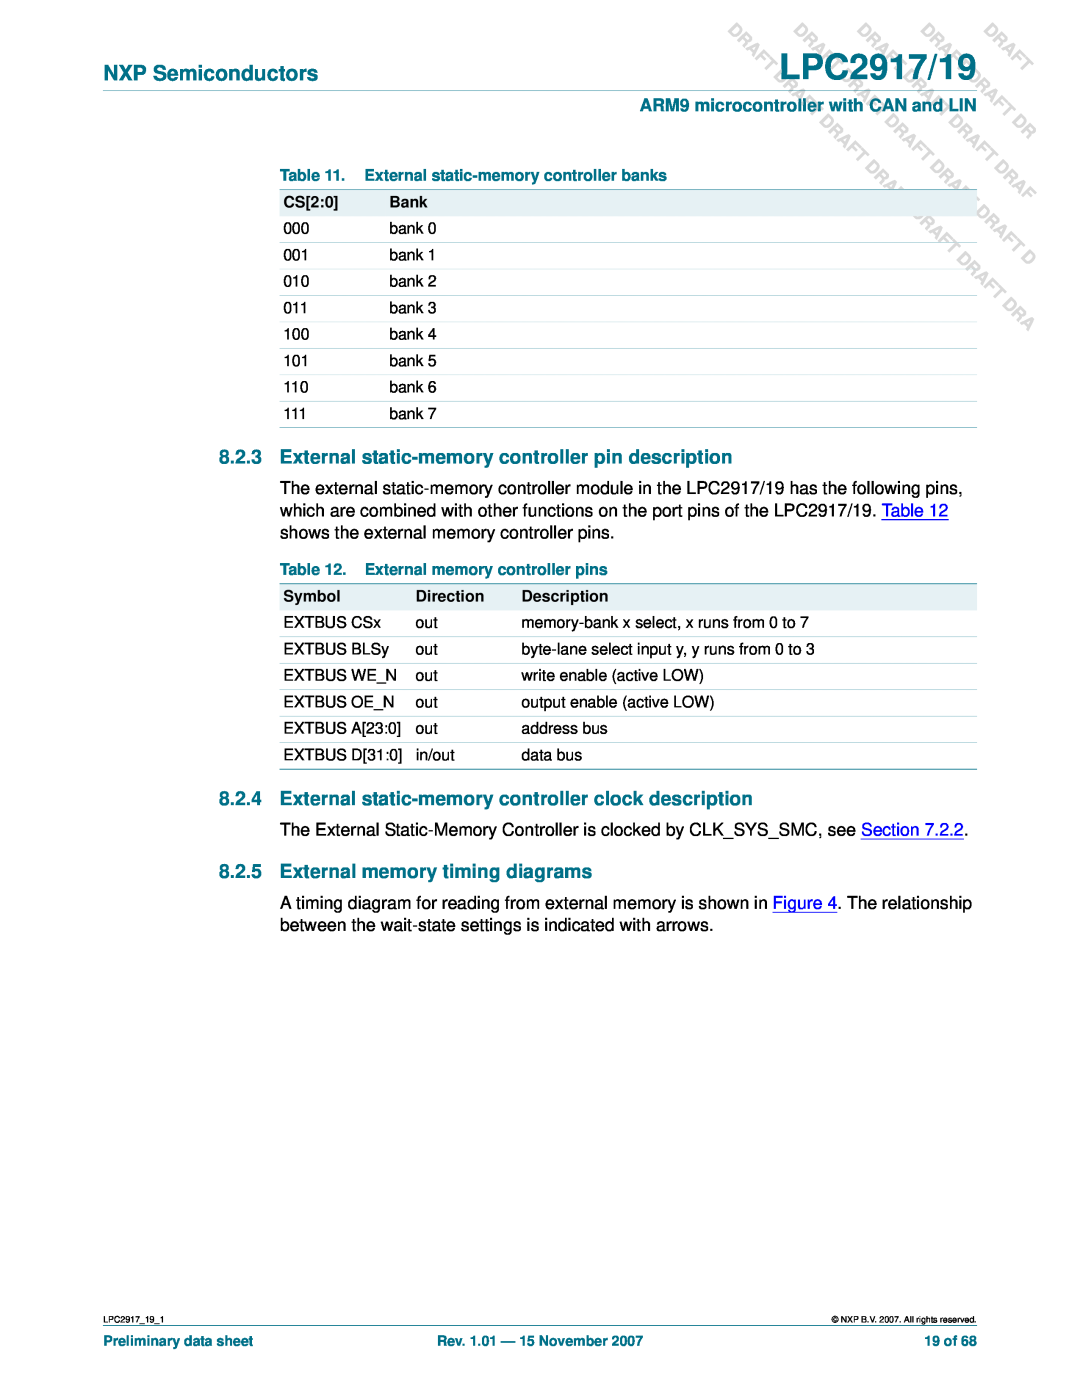 NXP Semiconductors External static-memory controller pin description, External memory timing diagrams, DLPC2917/19 